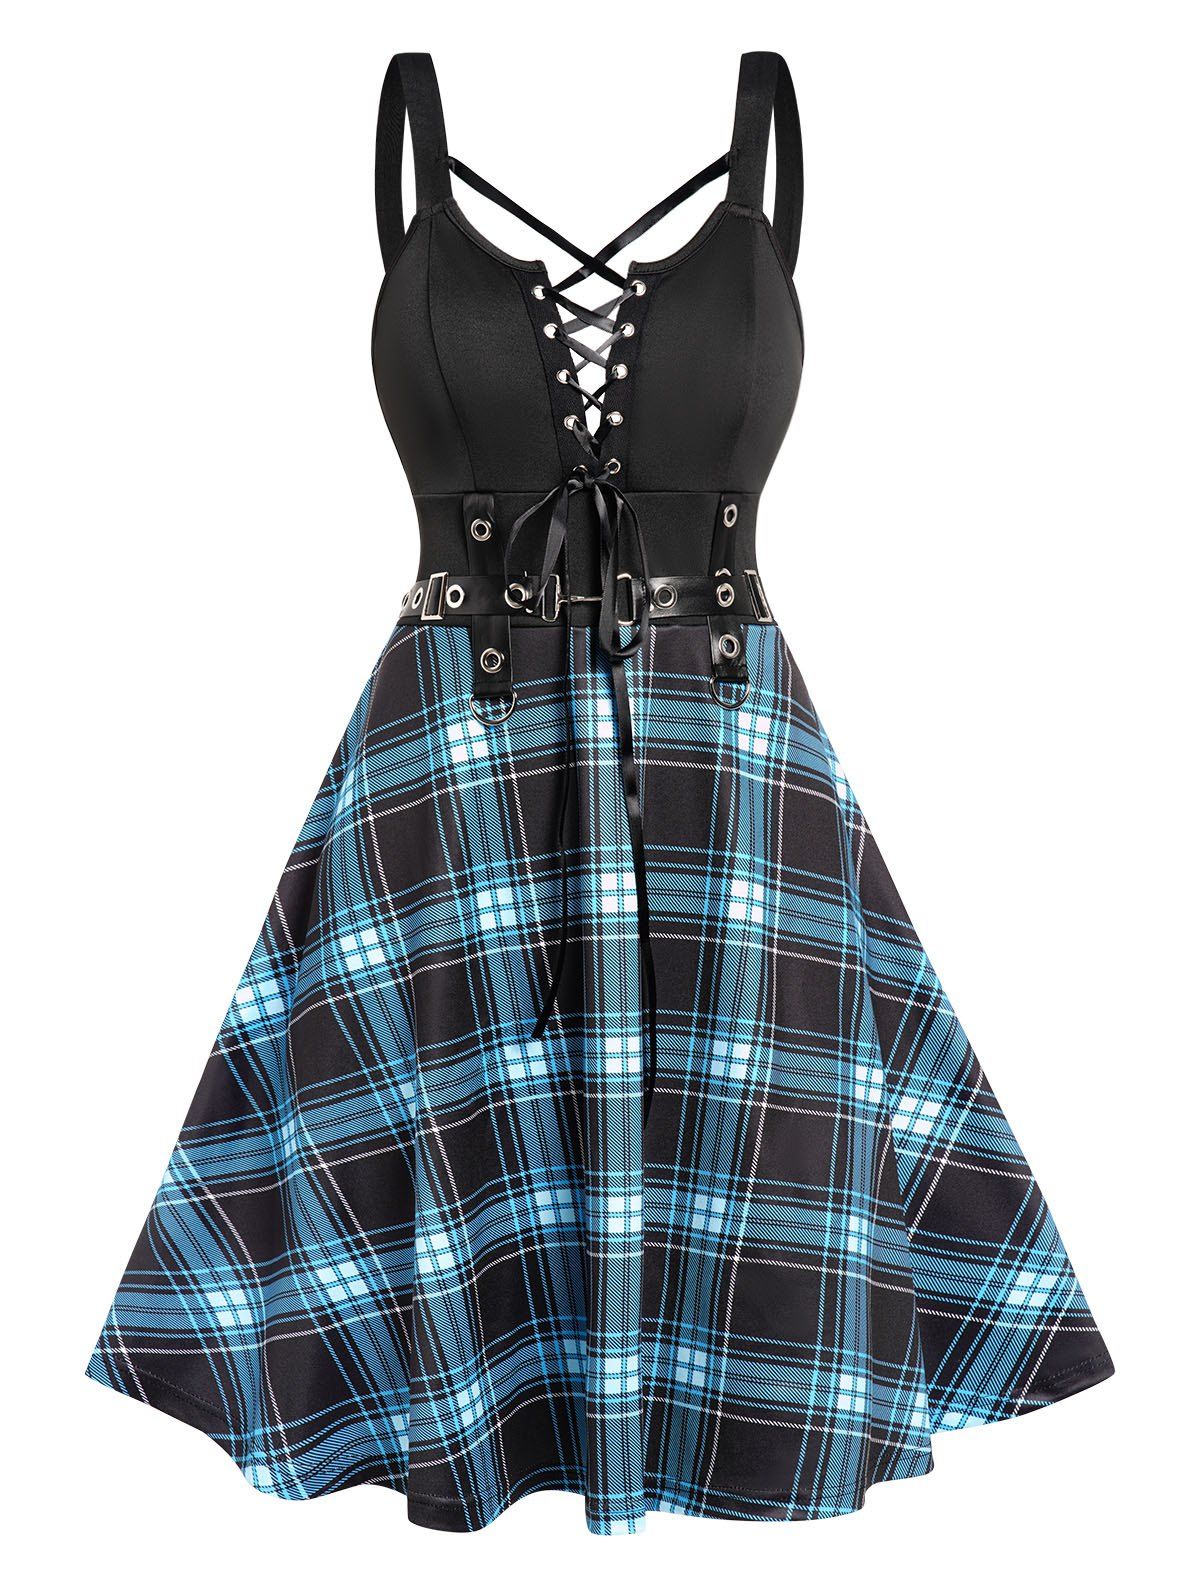 Plaid Print Dress Lace Up Buckle Strap Grommet High Waisted A Line Mini Dress - BLACK XXL